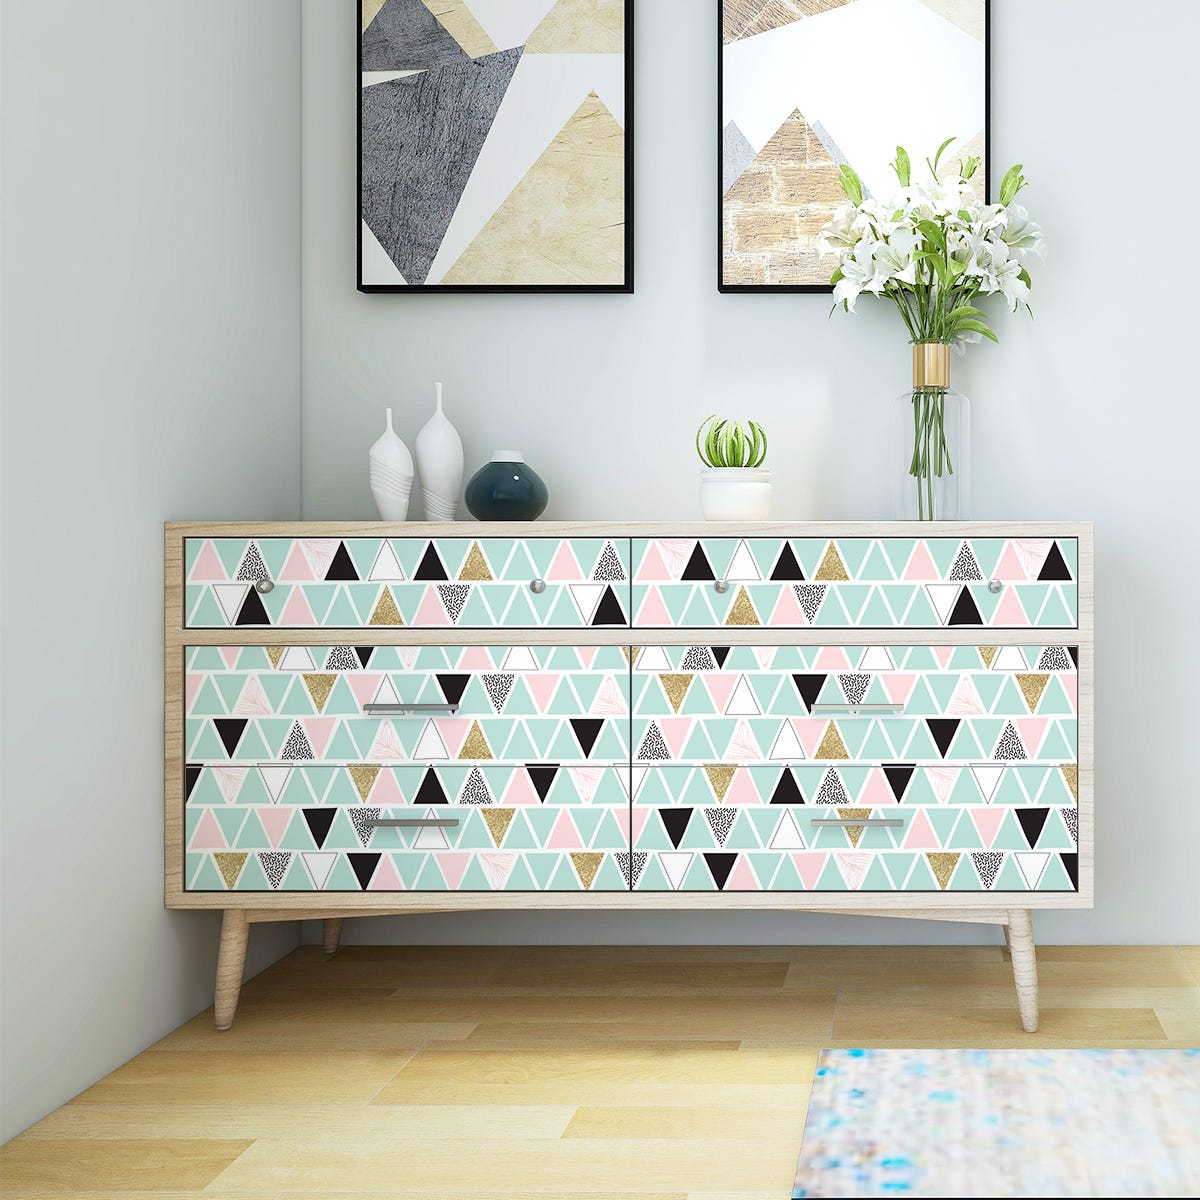 Vinilo escandinavo para muebles jenvak - adhesivo de pared - revestimiento  sticker mural decorativo - 60x90cm